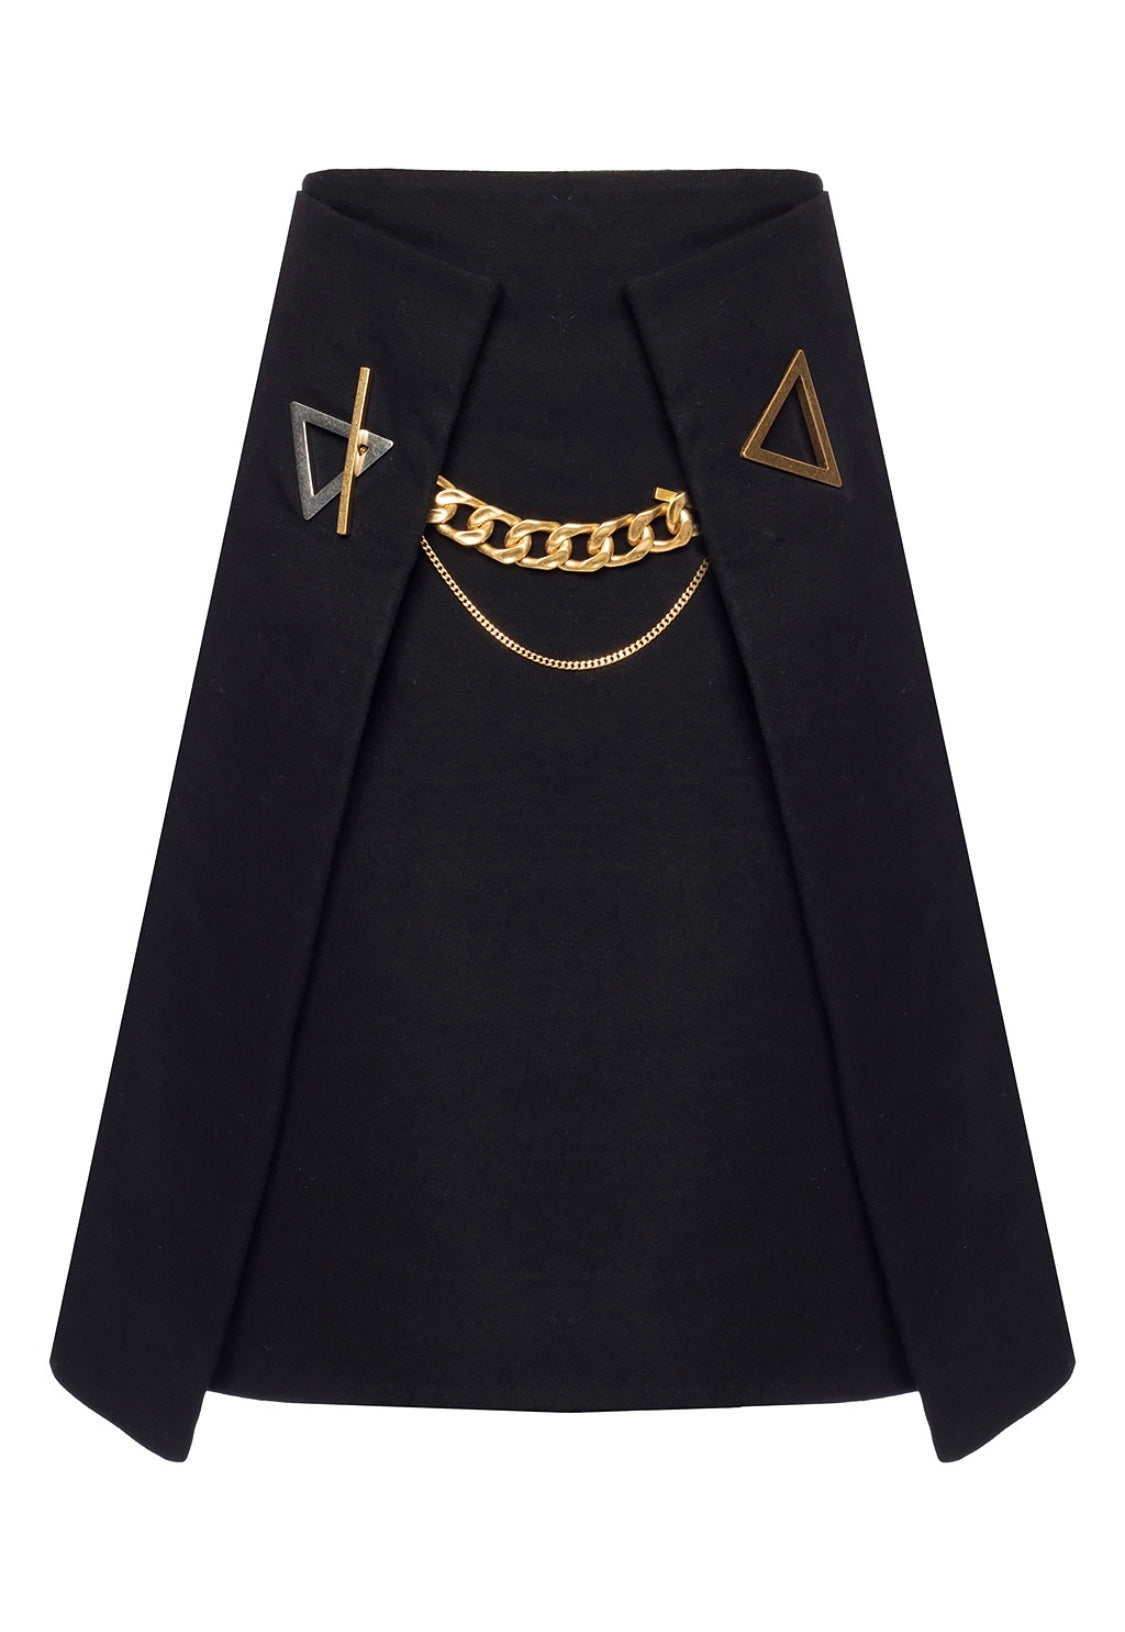 BOTTEGA VENETA  Chain cashmere Skirt new with tags RRP: $2100